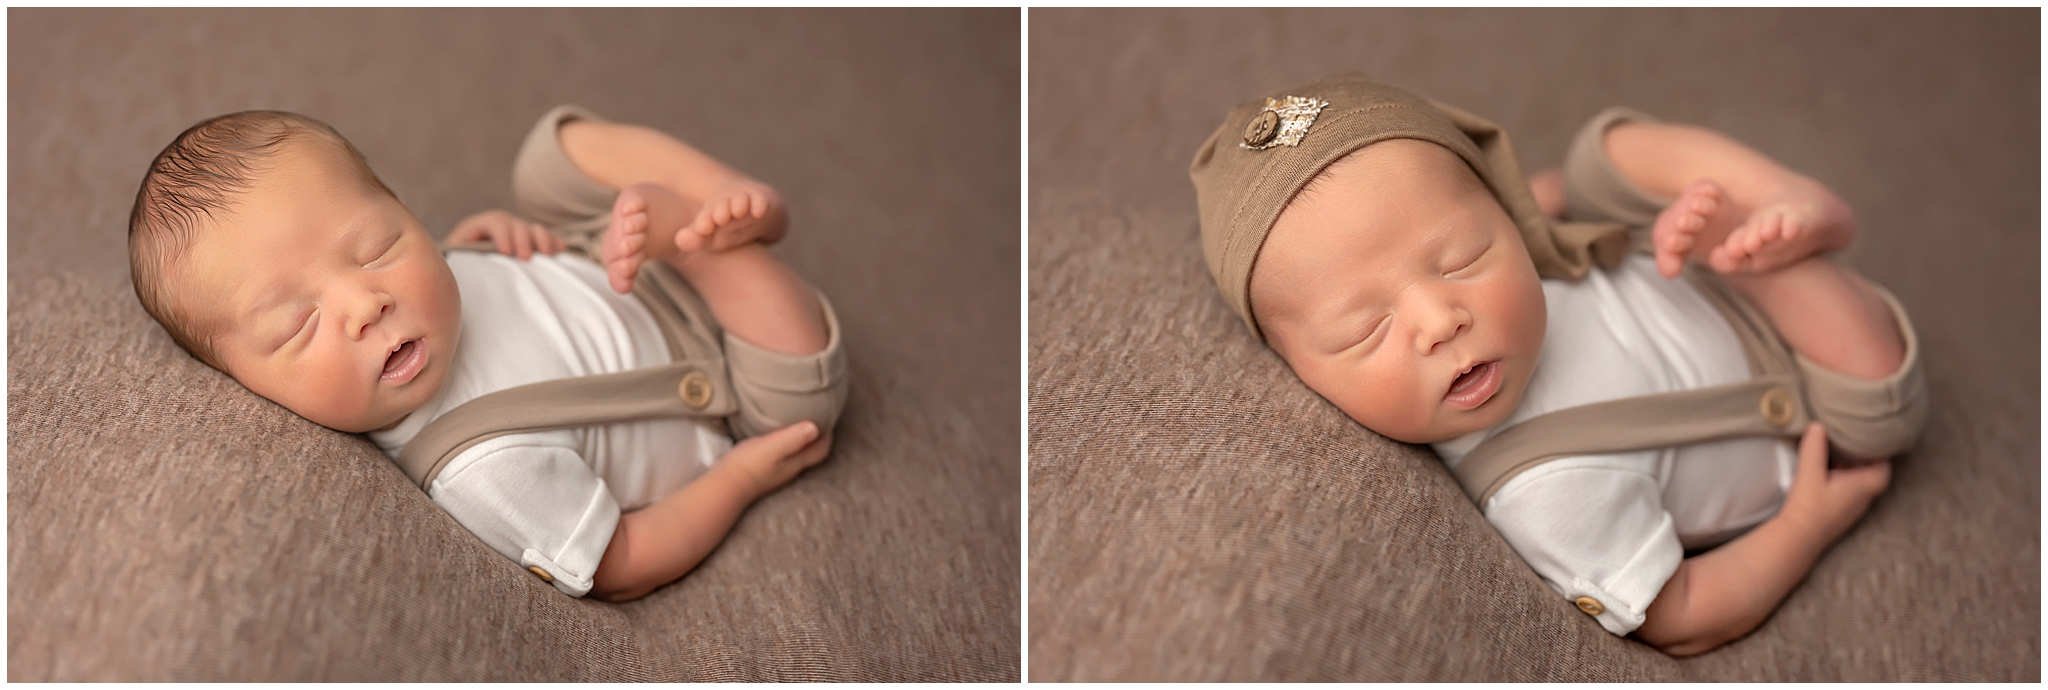 newborn baby posing for professional photographer in london ontario